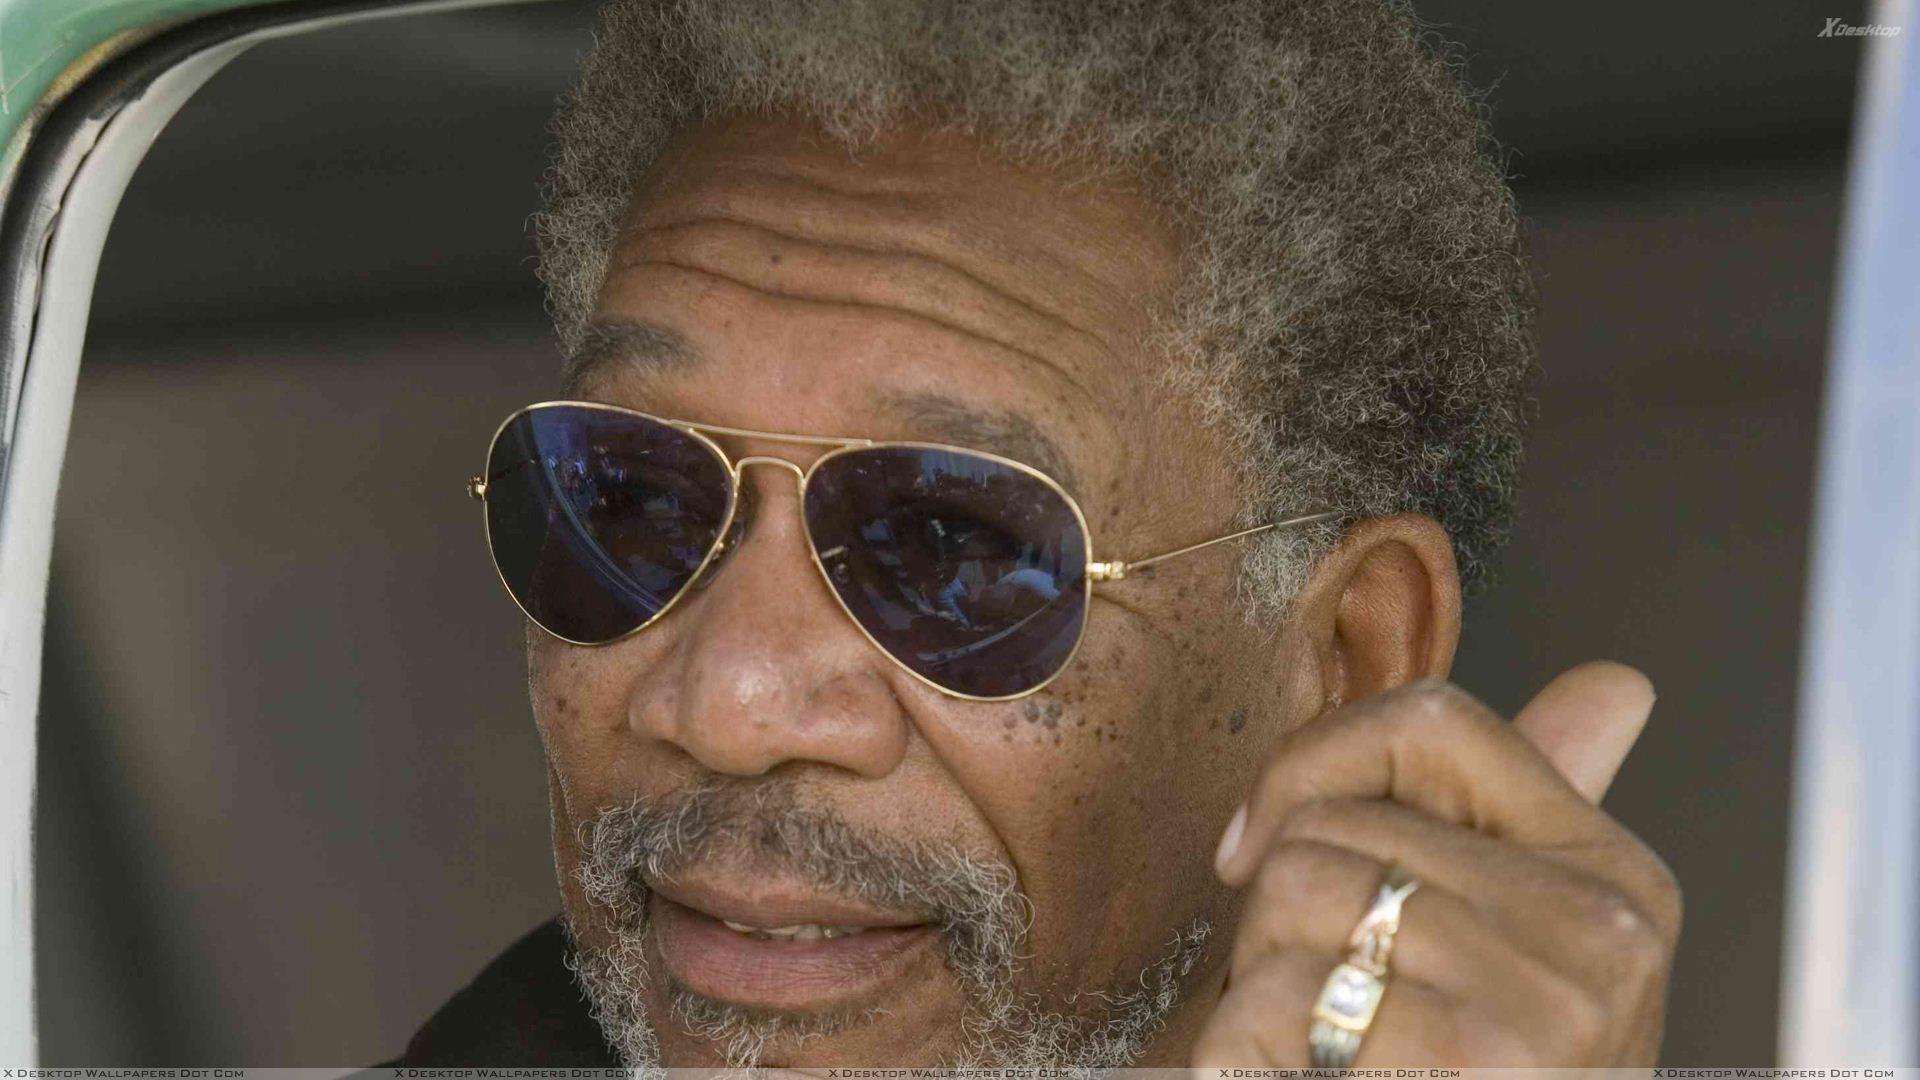 Morgan Freeman Wallpaper, Photo & Image in HD